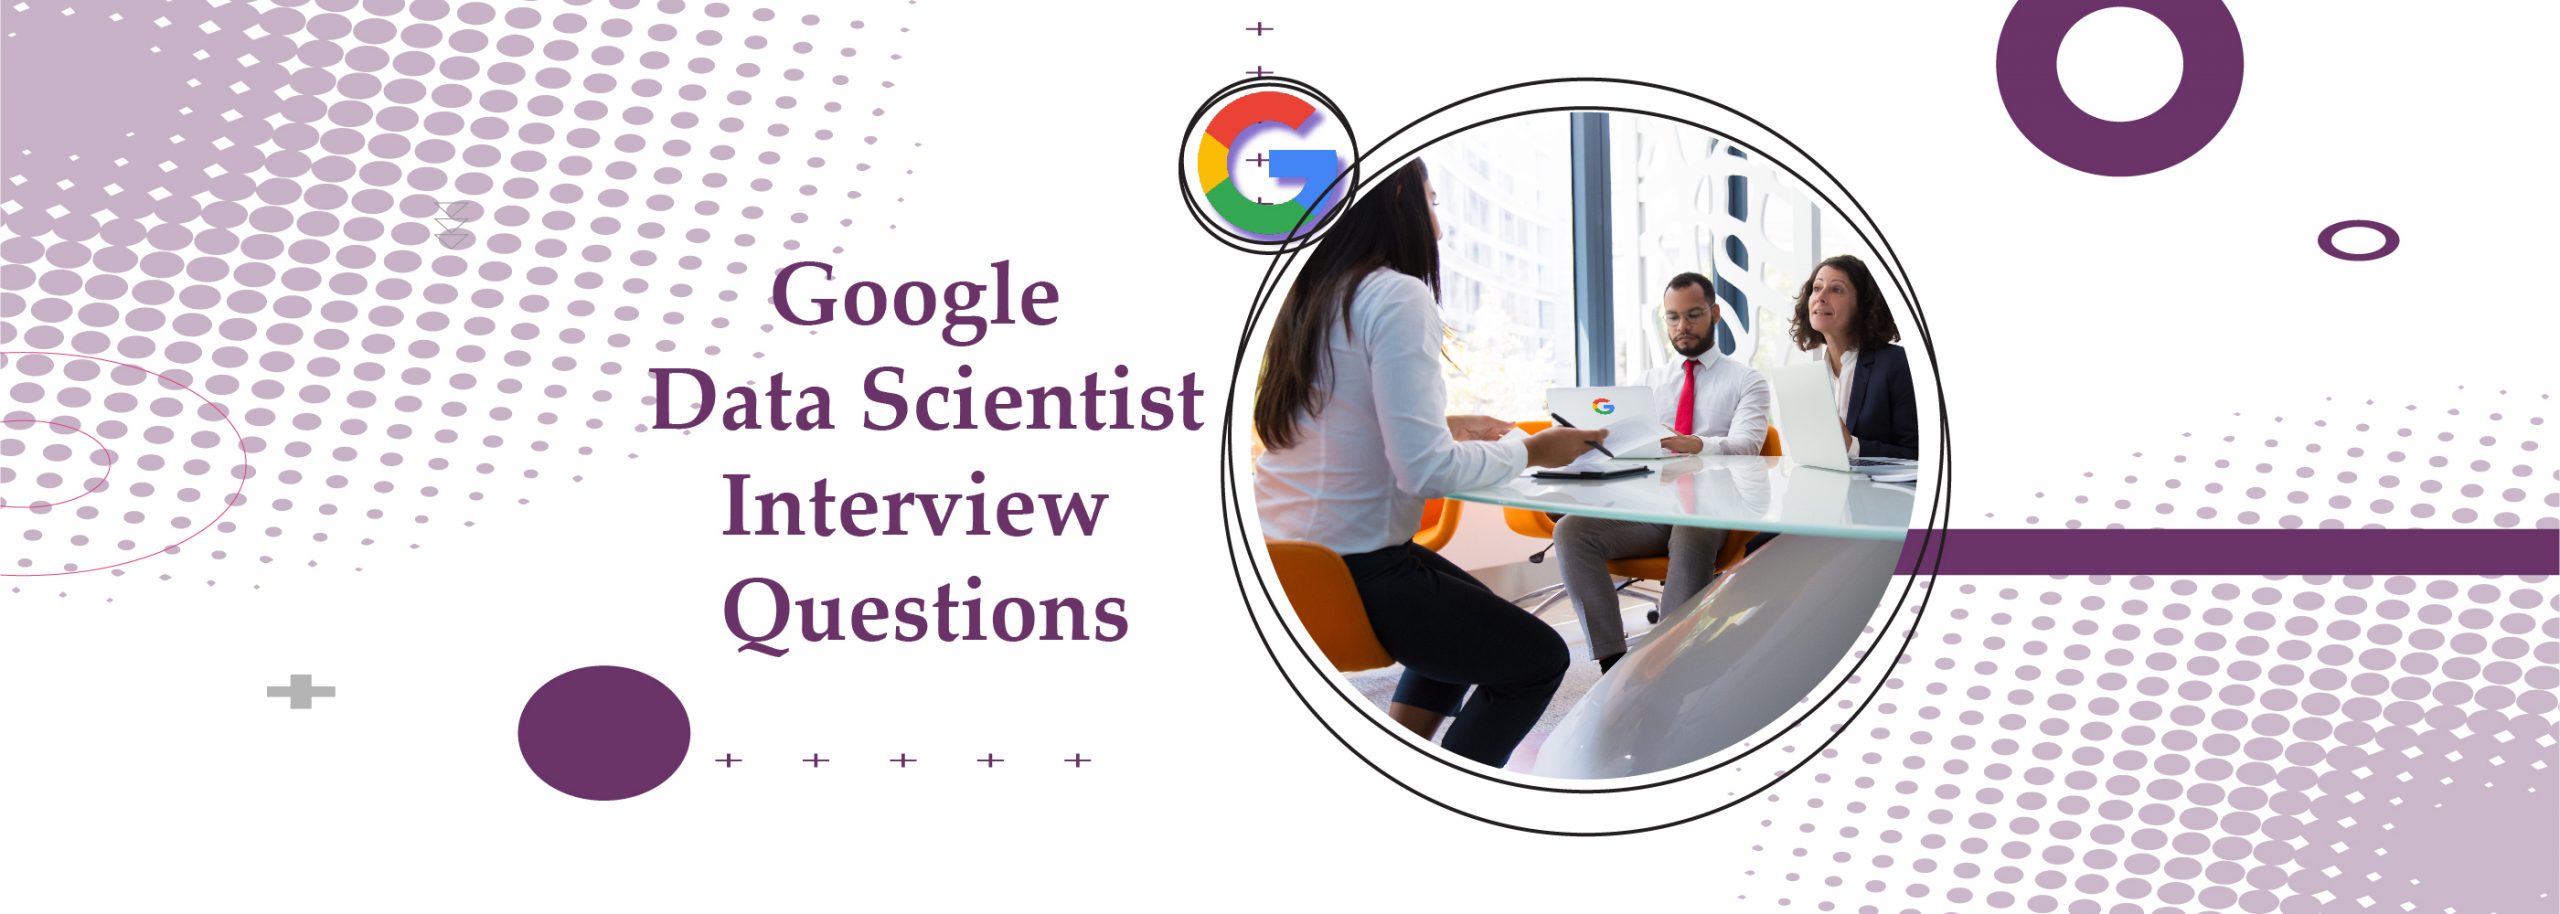 Google Data Scientist Interview Questions